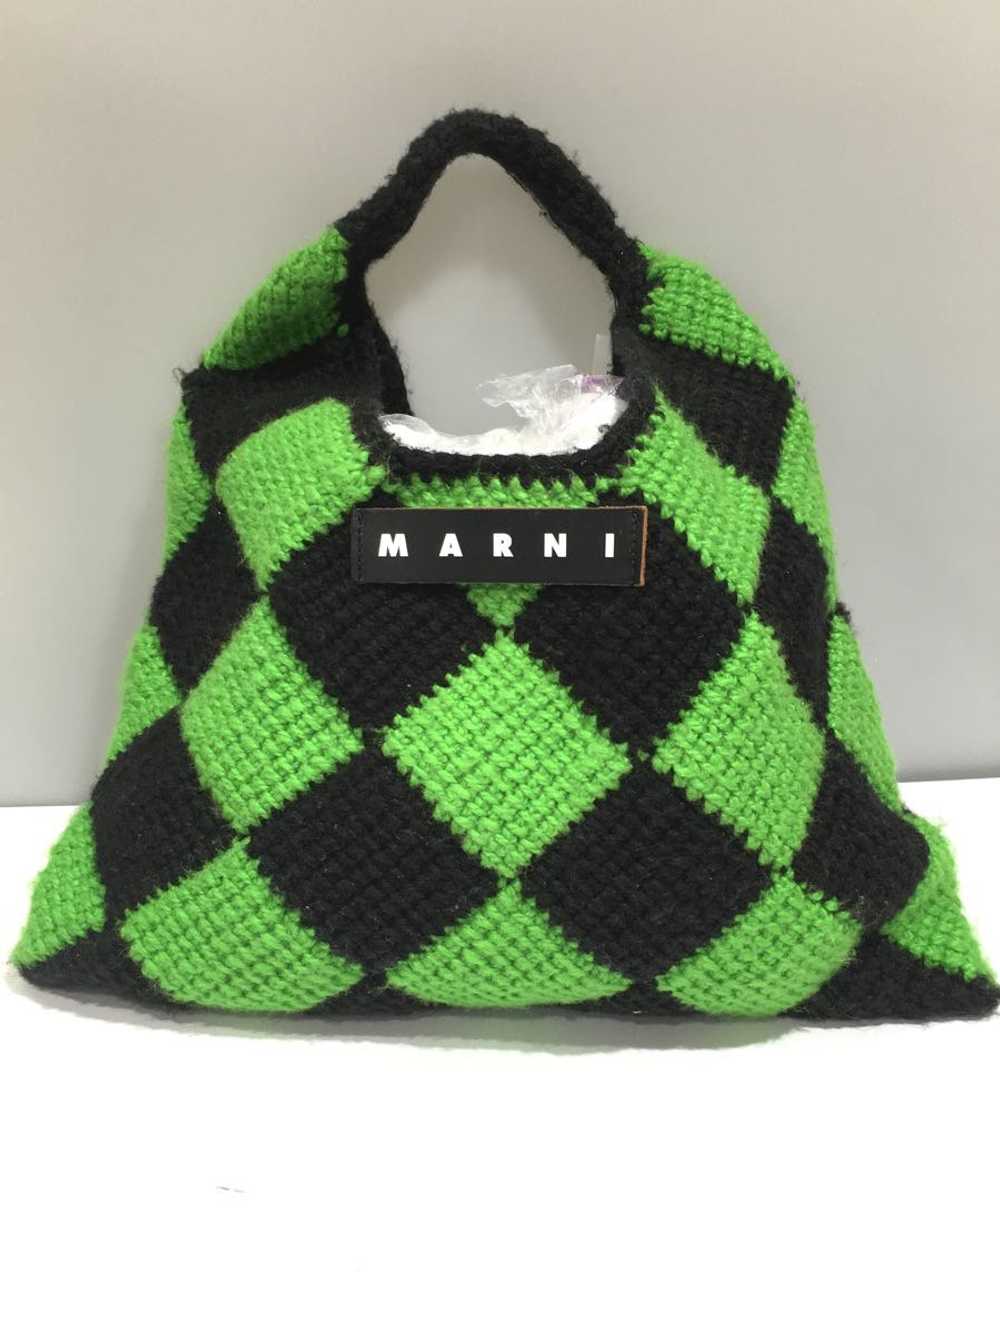 Marni Argyle Pattern Knit Handbag/Wool/Grn Bag - image 1